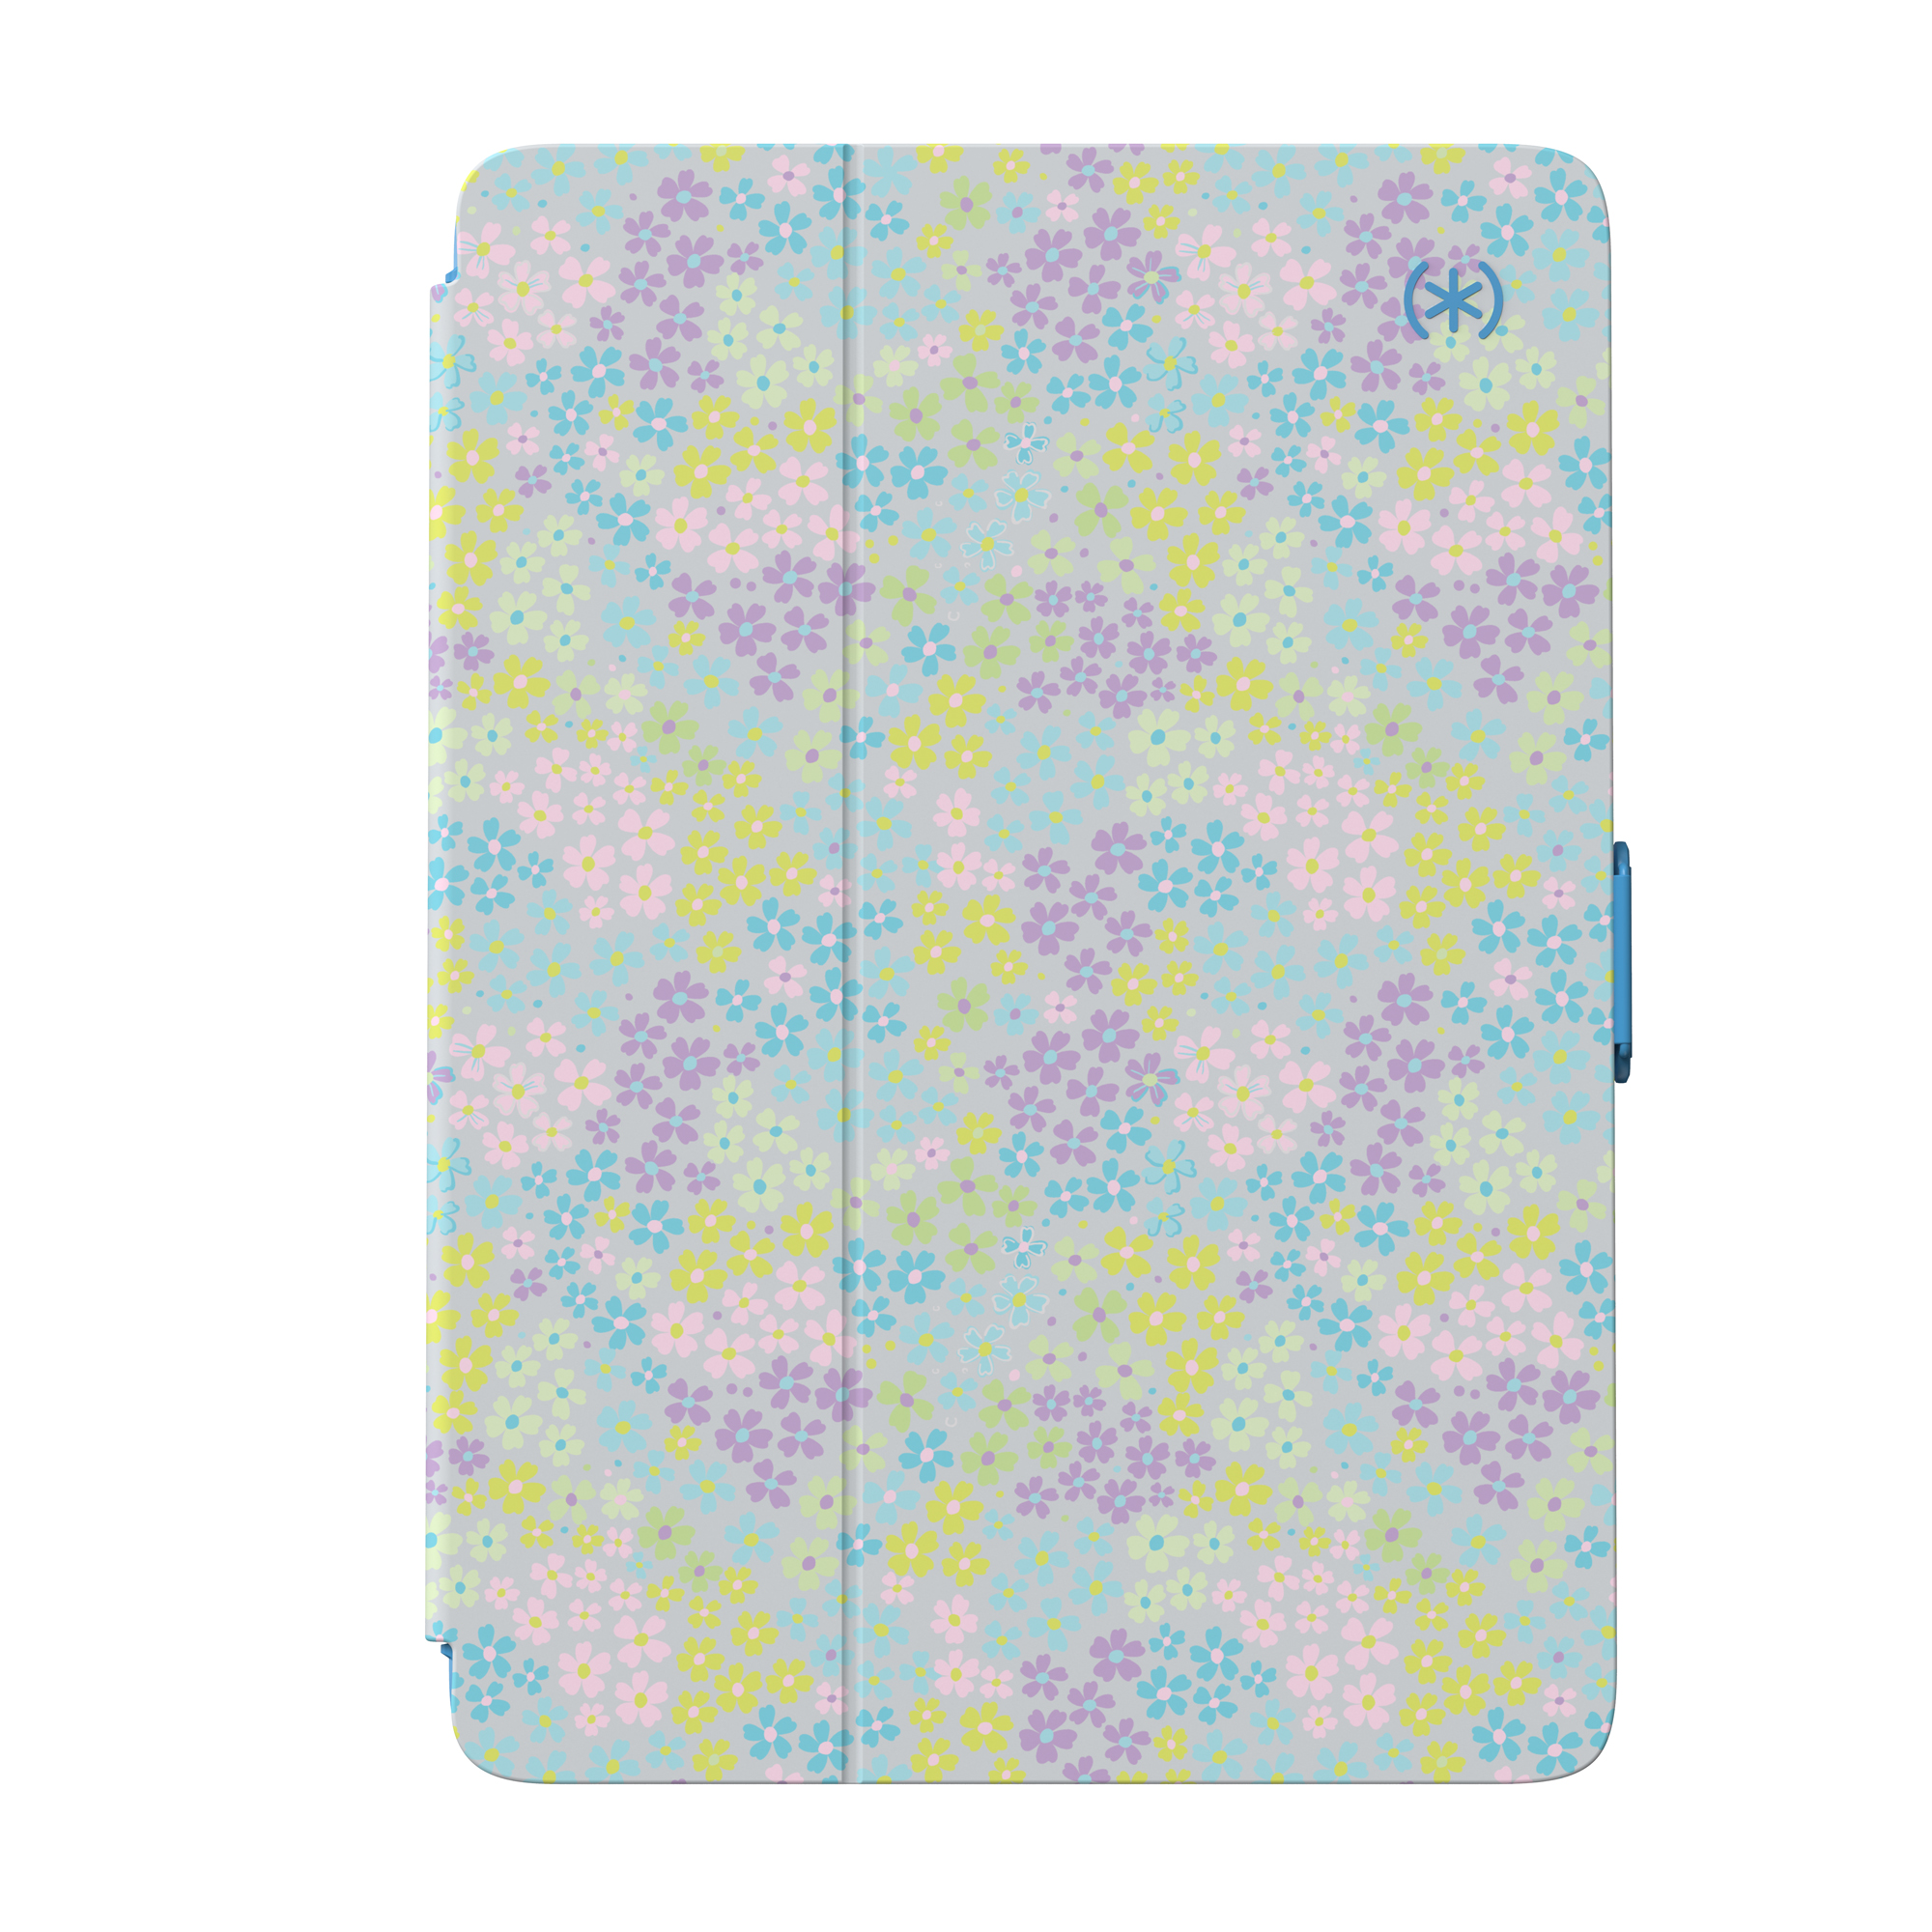 Speck 9.7 " iPad Air 2 Folio Case, Flower Print Aster Purple & Blue - image 1 of 7